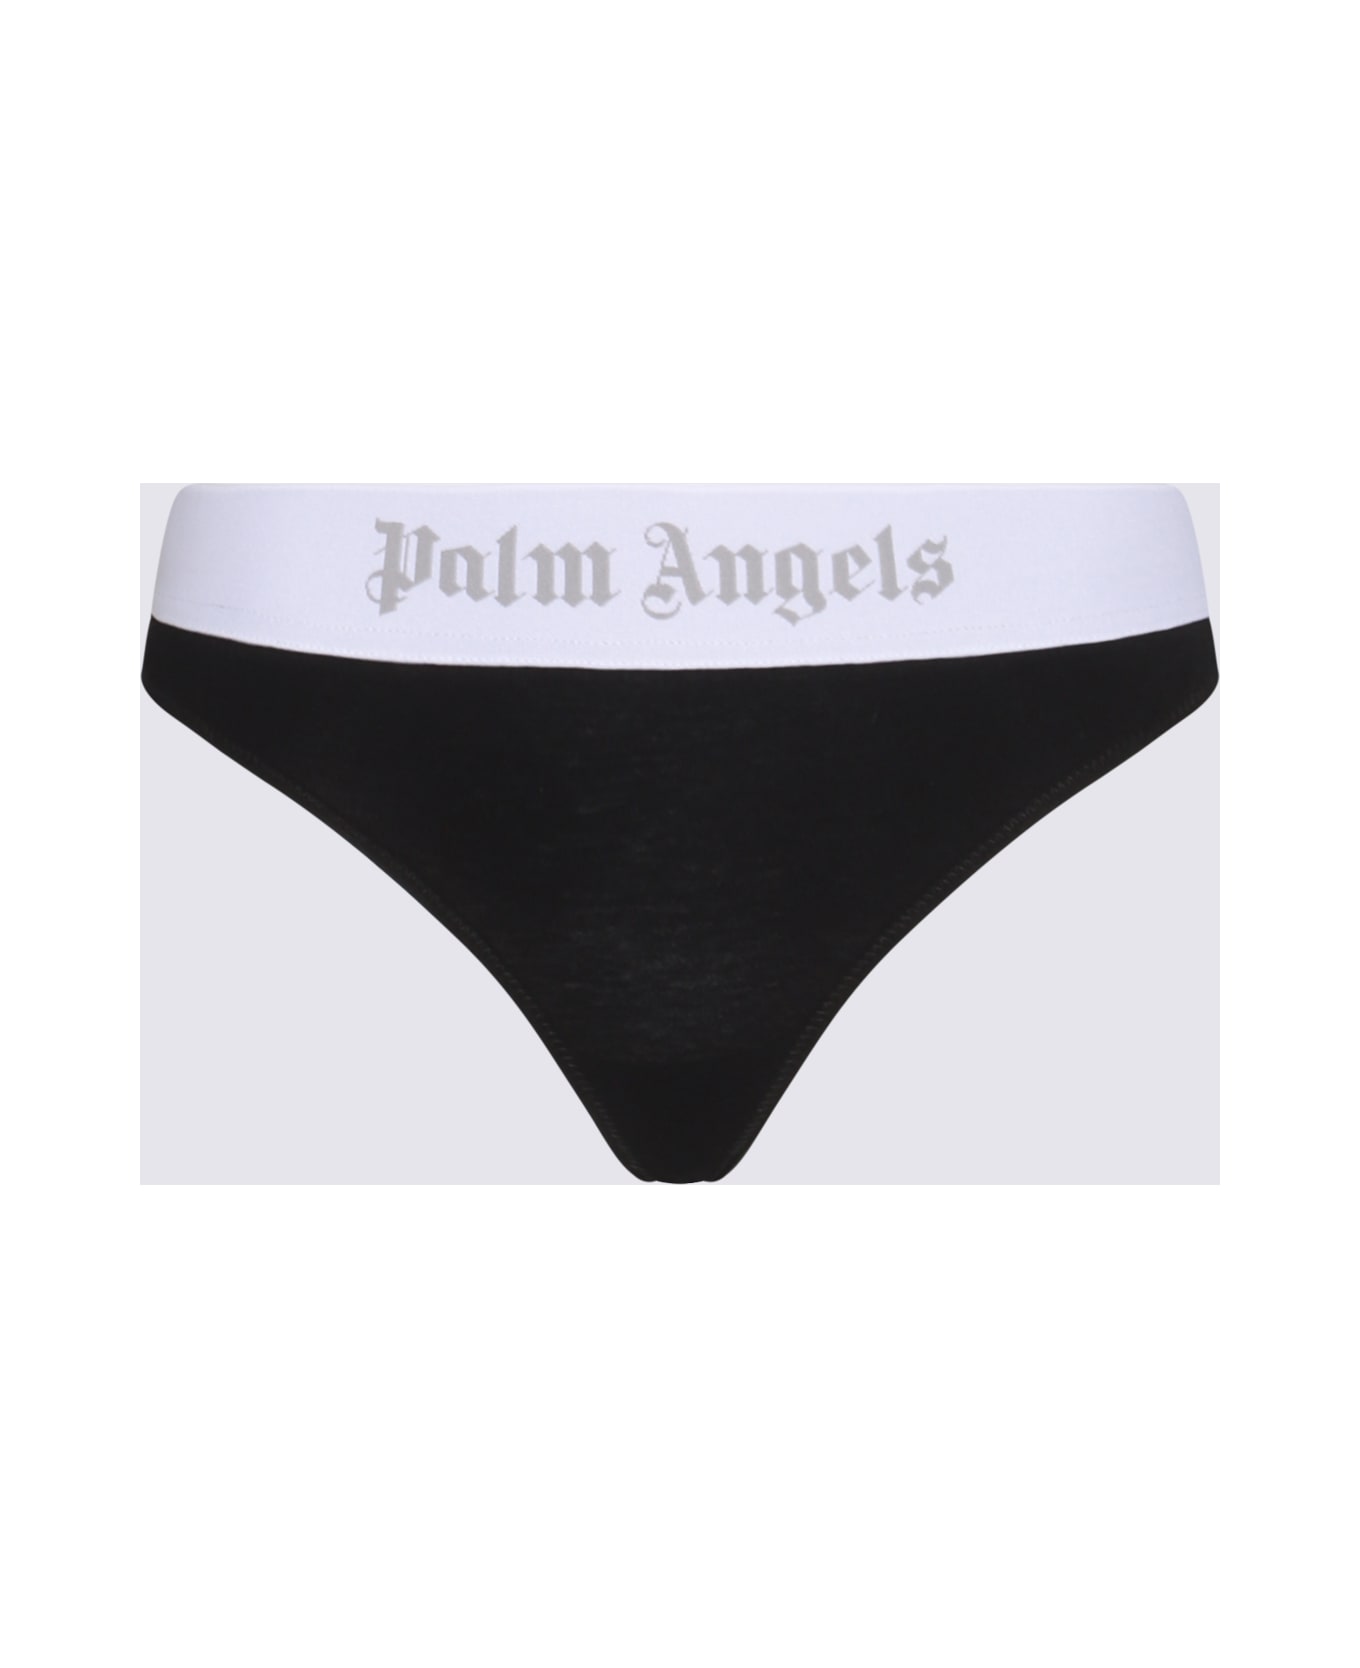 Palm Angels Black Cotton Brief - Black ショーツ